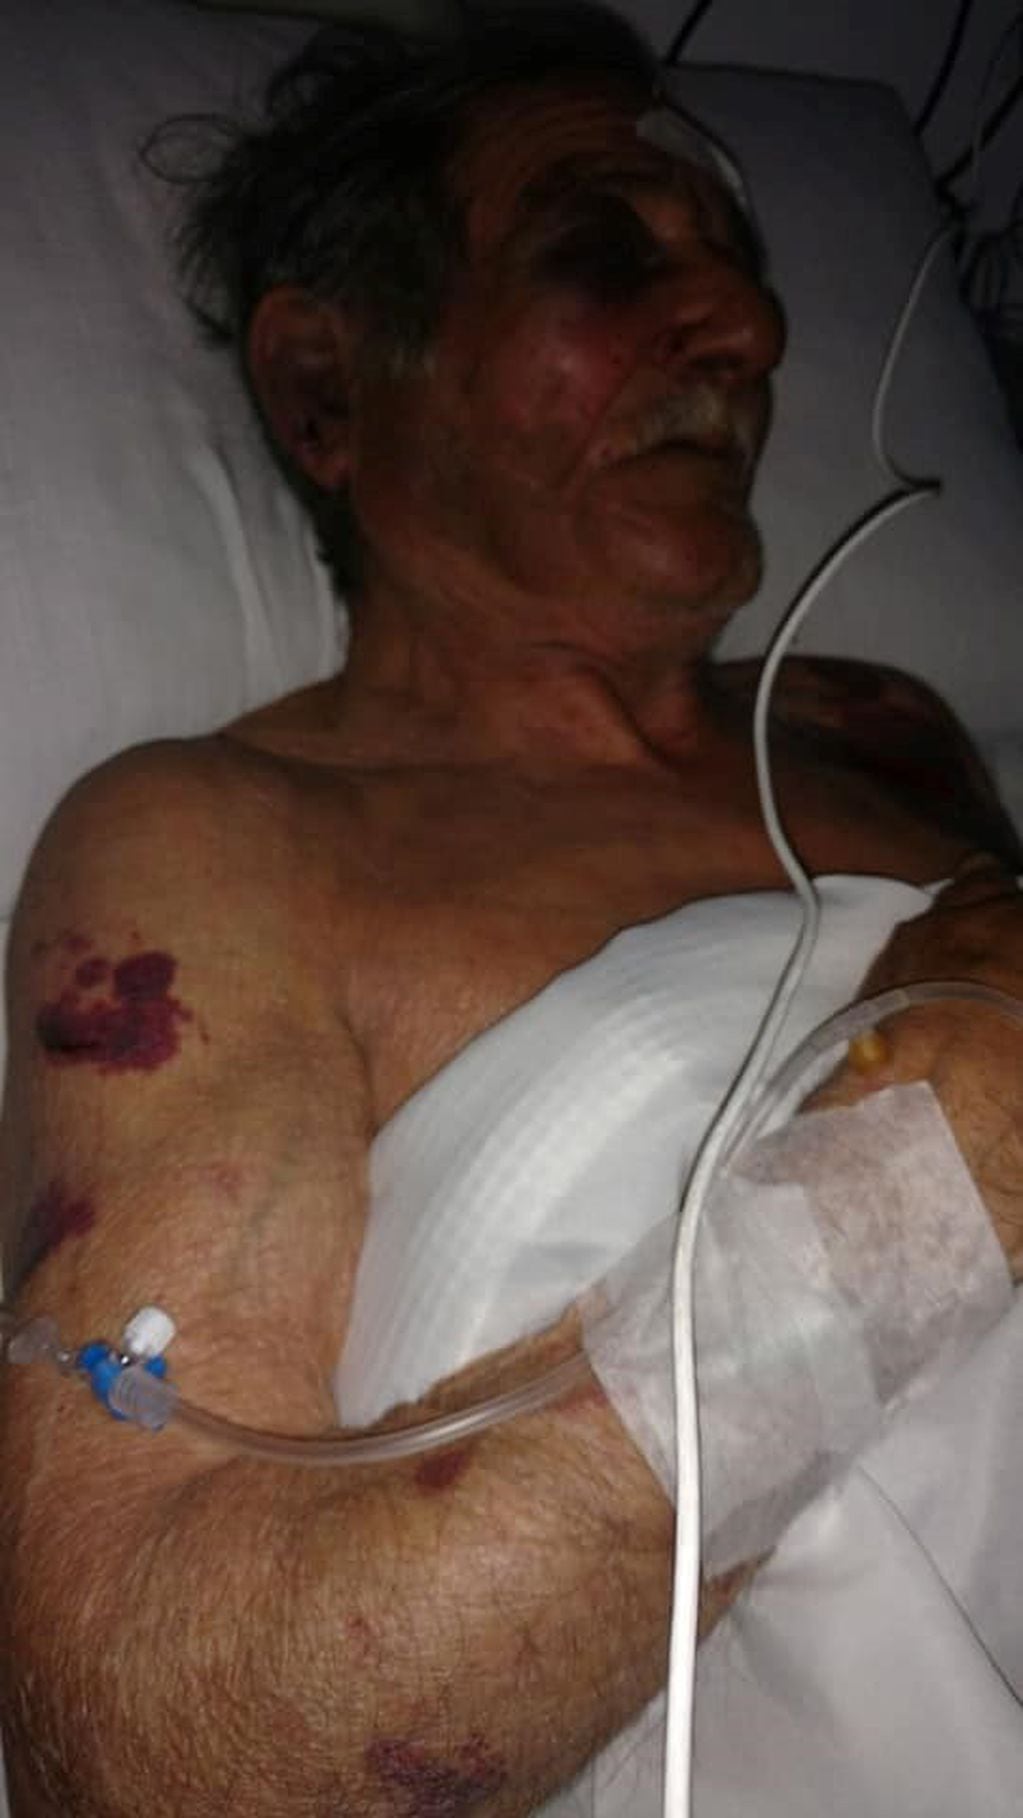 Ramón Peralta hospitalizado tras la golpiza.